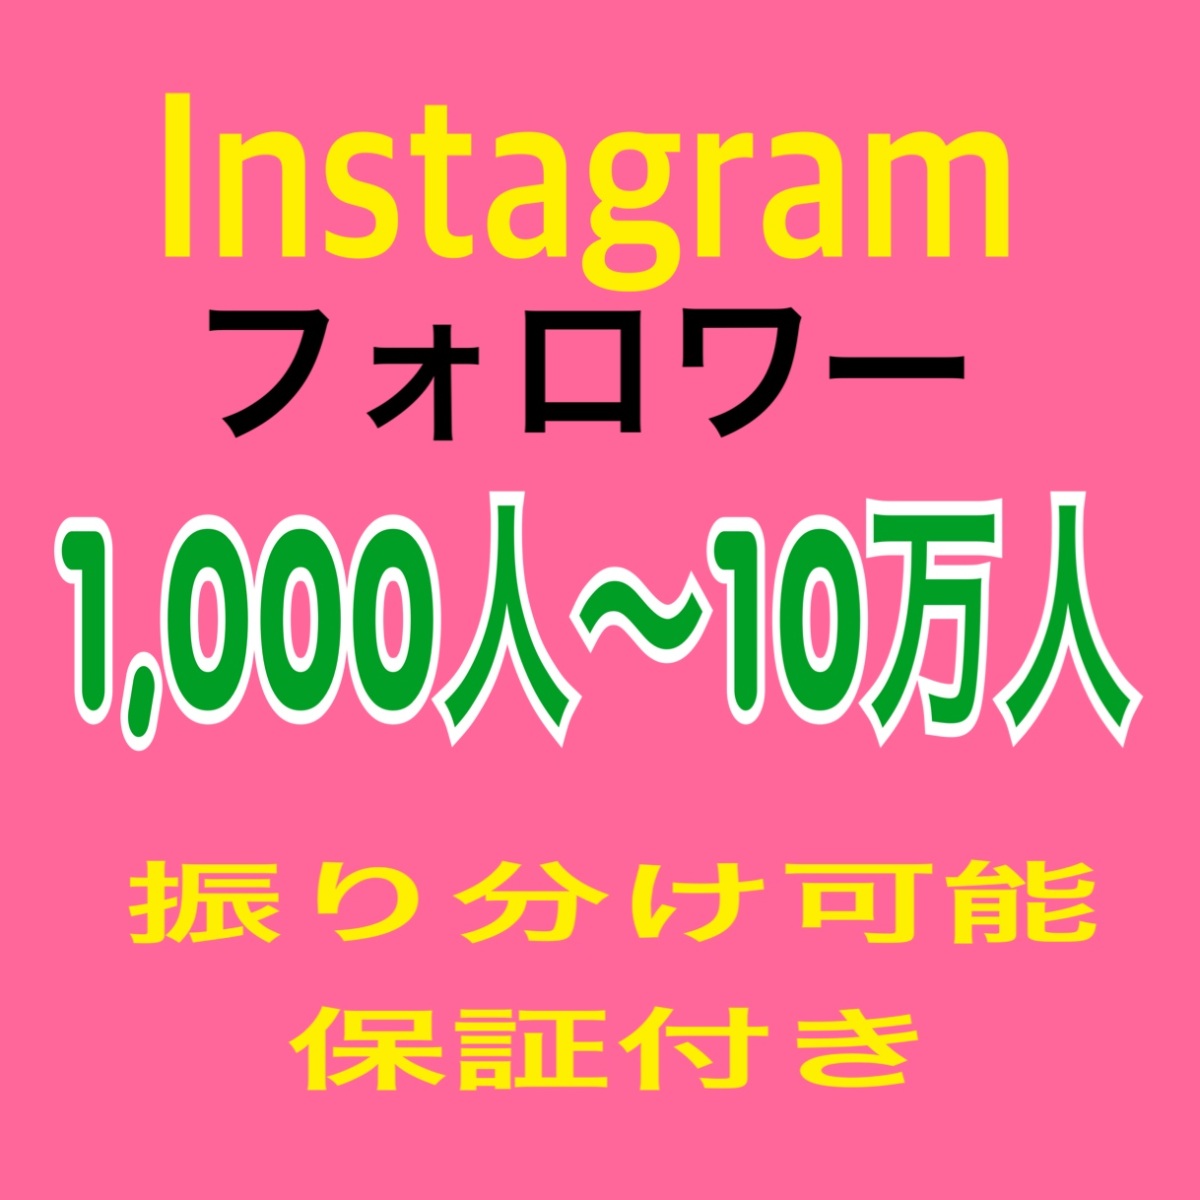 Increase Instagram followers +1000 people